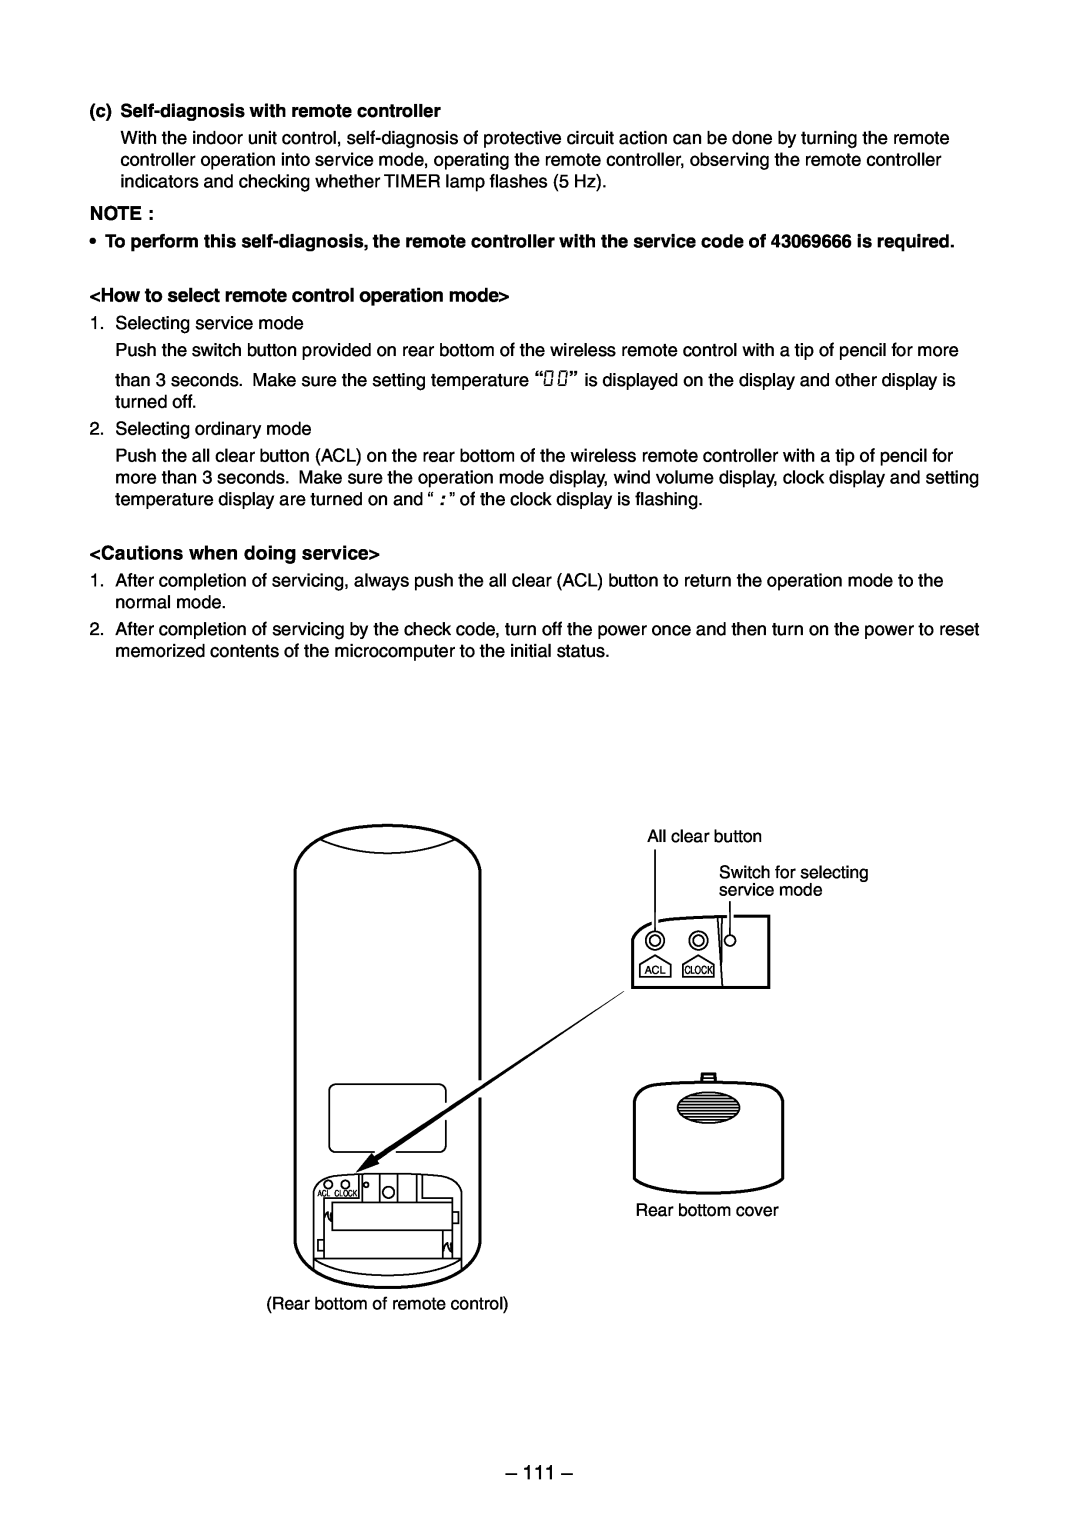 Toshiba RAV-SM560AT-E, RAV-SM800AT-E 111, <How to select remote control operation mode>, <Cautions when doing service> 